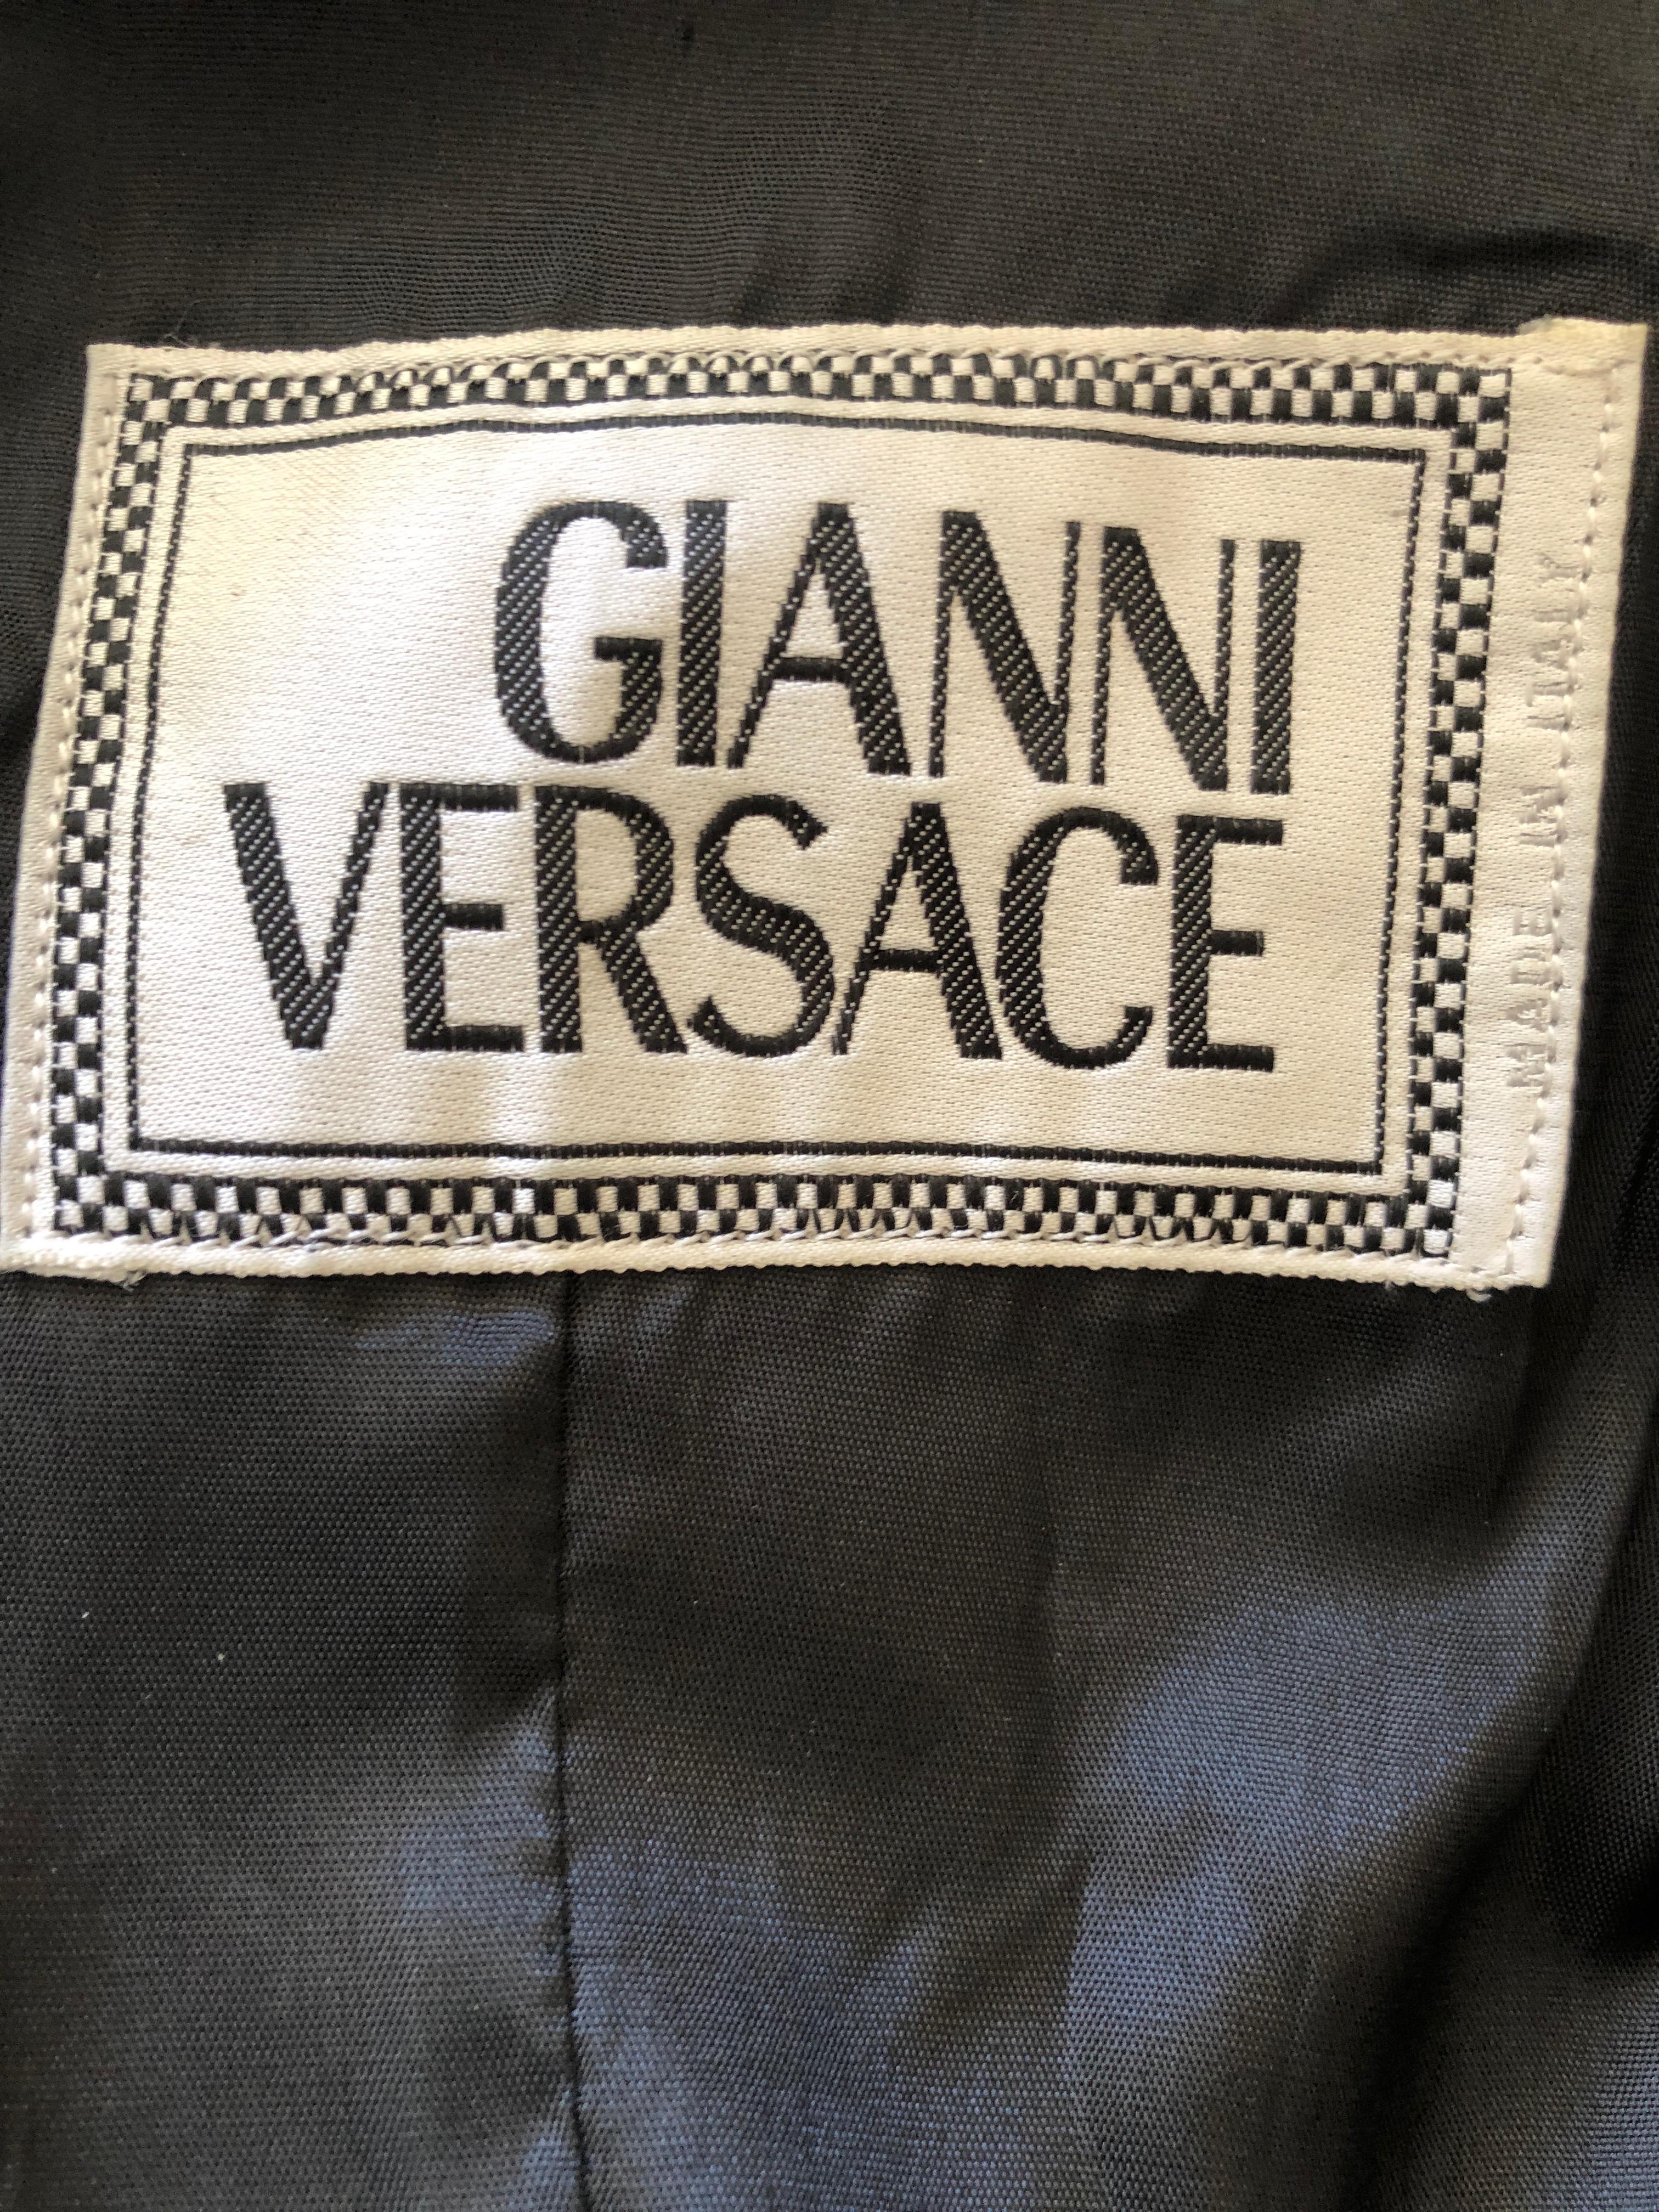 Gianni Versace 1990 Lambskin Leather Moto Jacket with Gold Embellishment 6